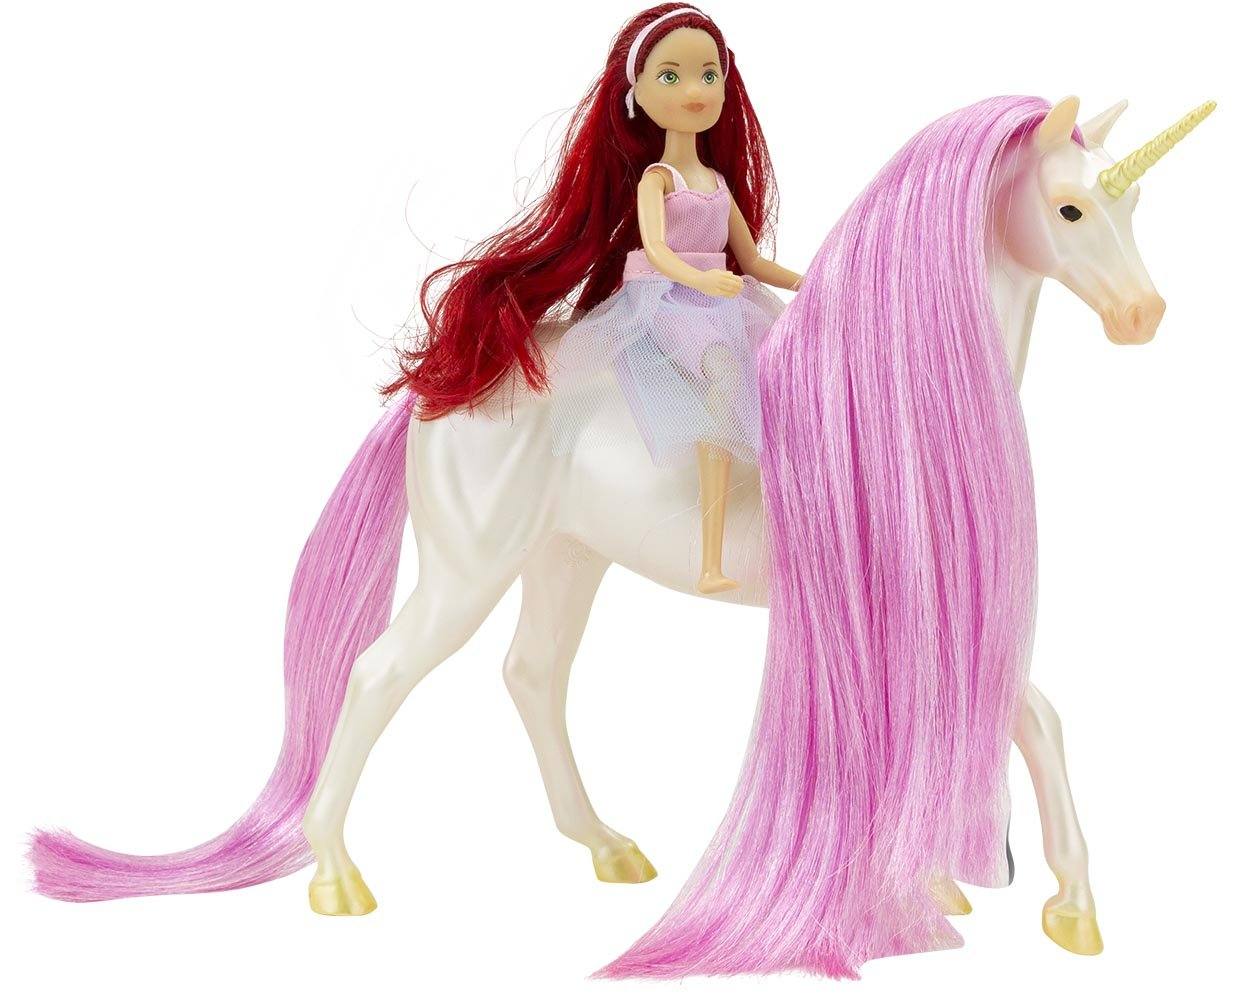 Breyer Magical Unicorn Sky and Fantasy Rider, Meadow